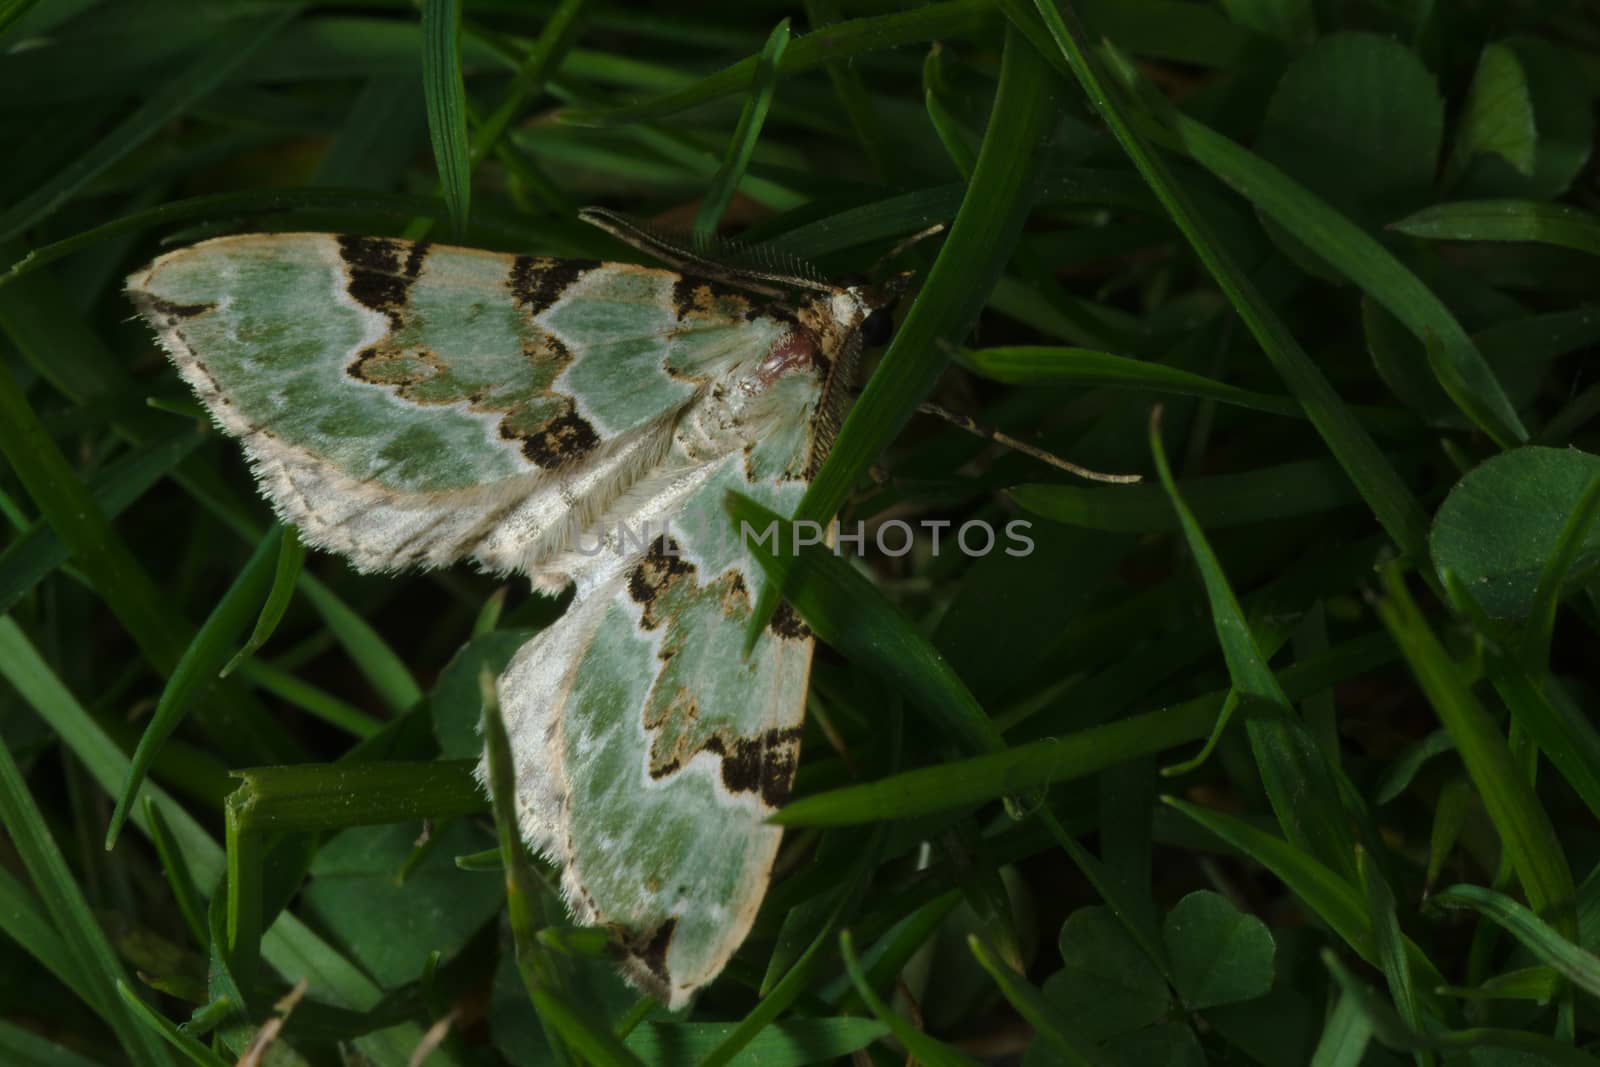 Green carpet moth blends in amongst lawn grass by RhysL